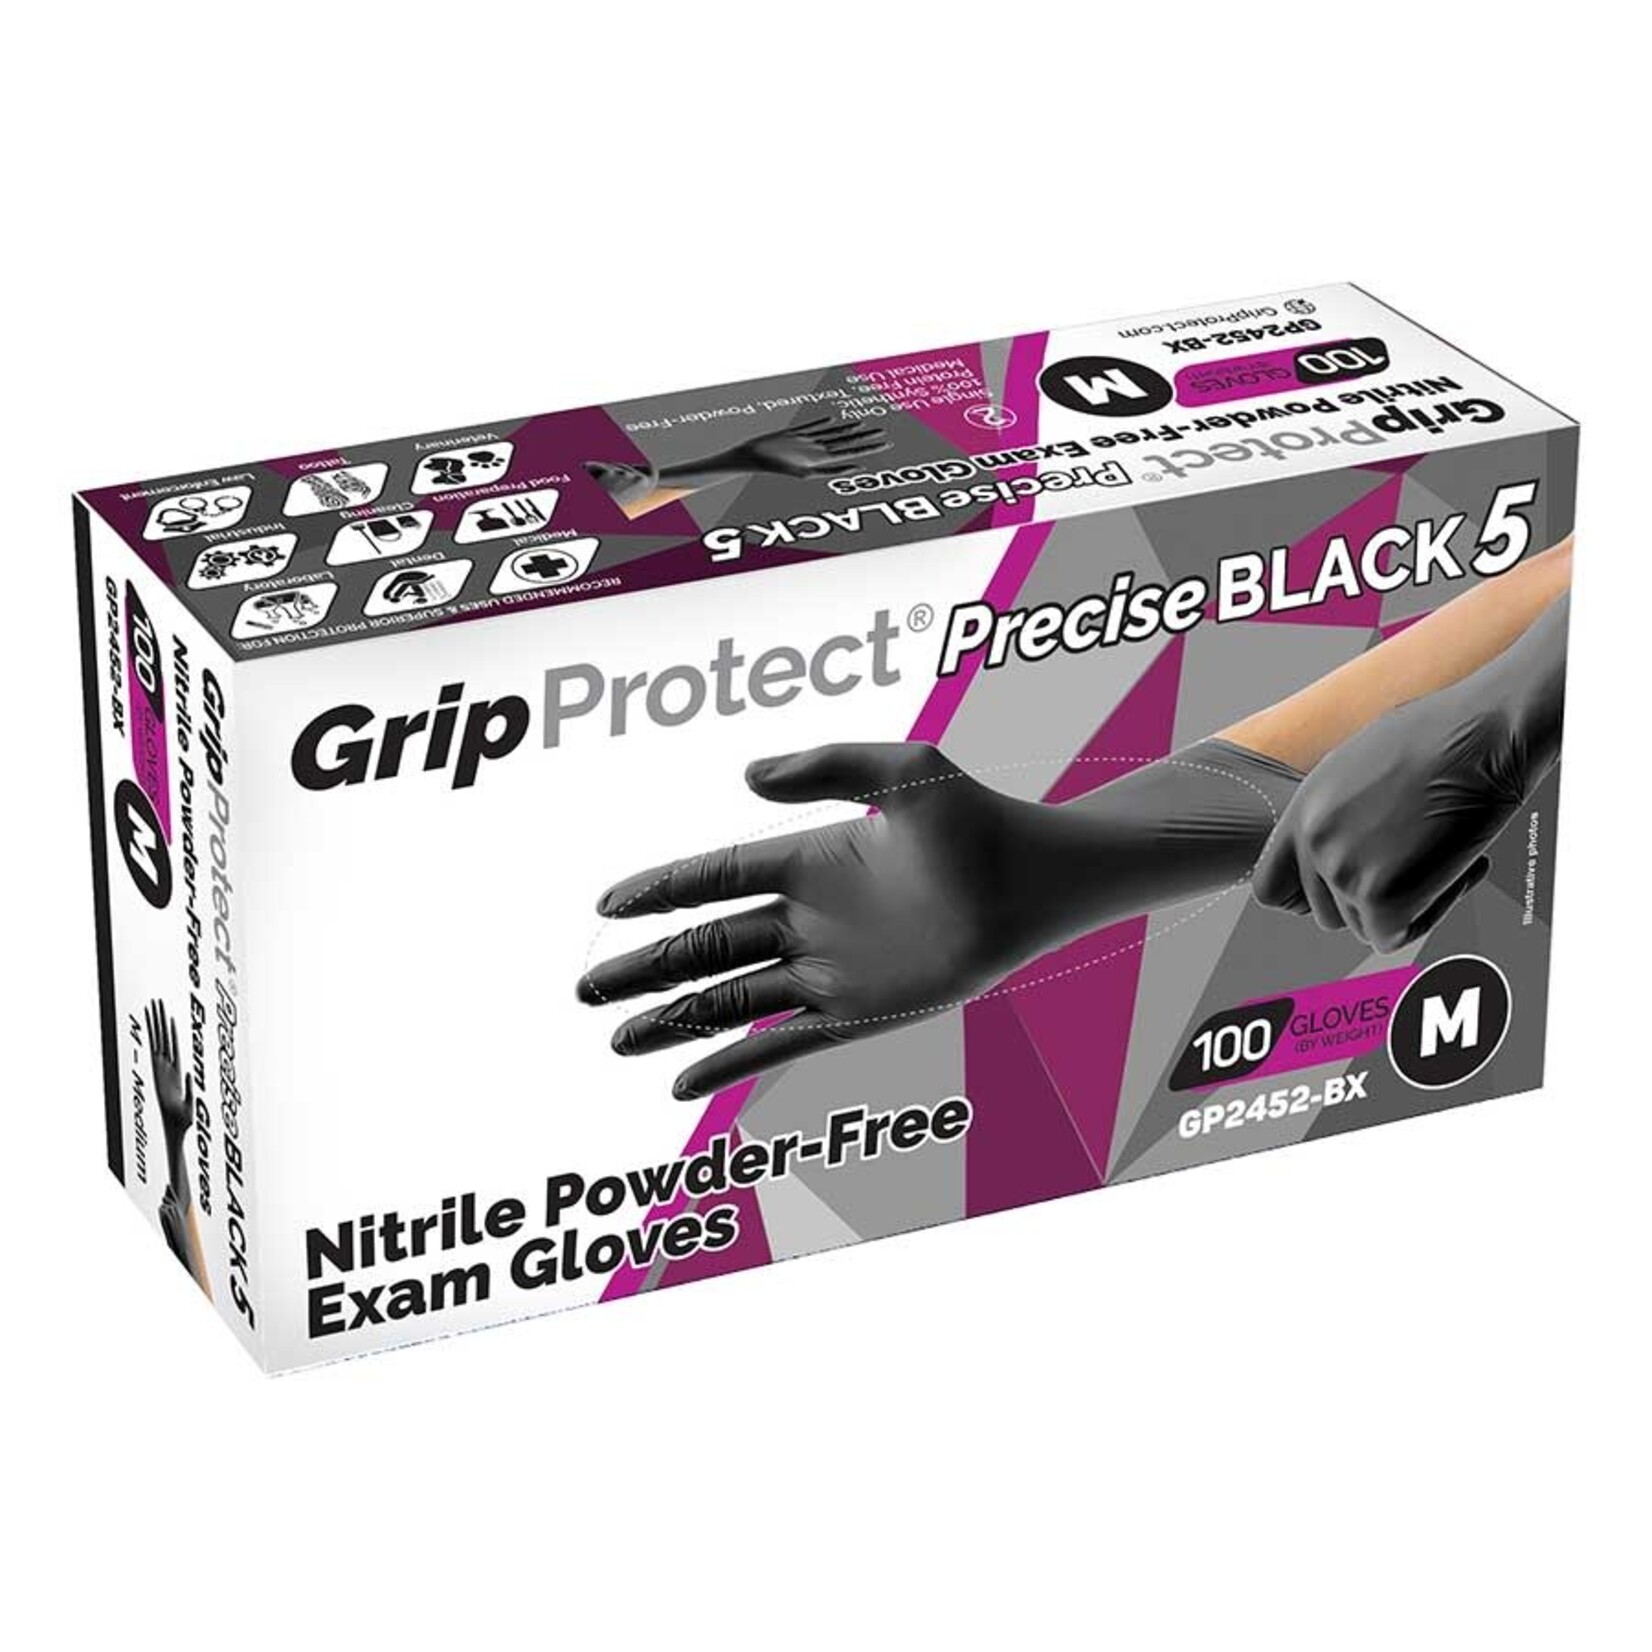 BMC Protect GripProtect Precise BLACK 5 Nitrile Powder-Free Exam Gloves, S - Single Box (100 Gloves)